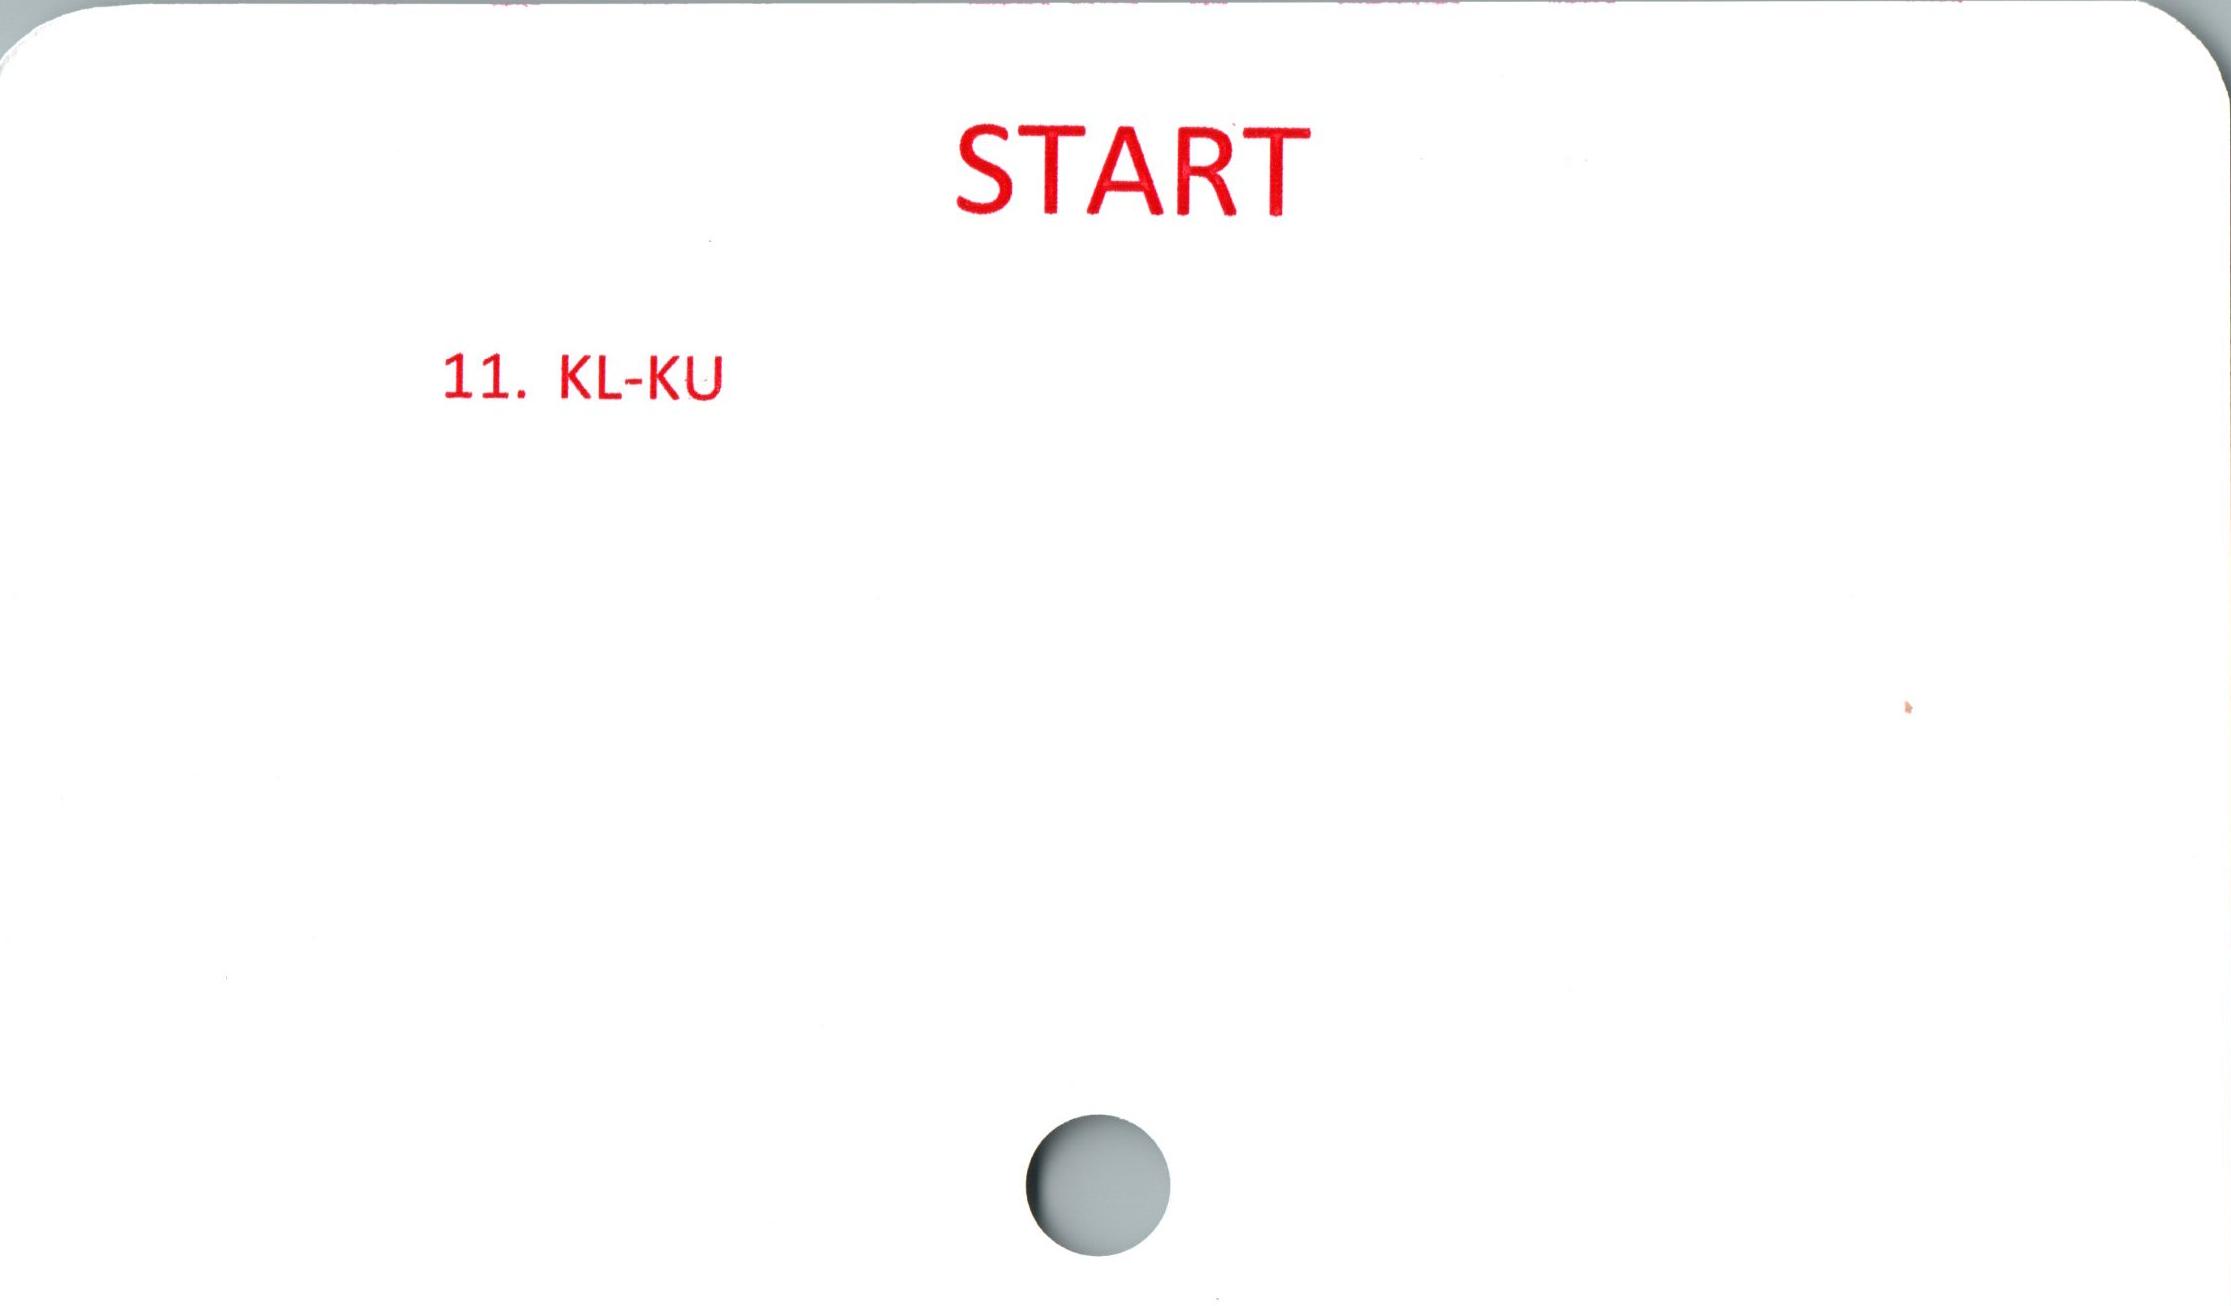 START START

﻿11. KL-KU